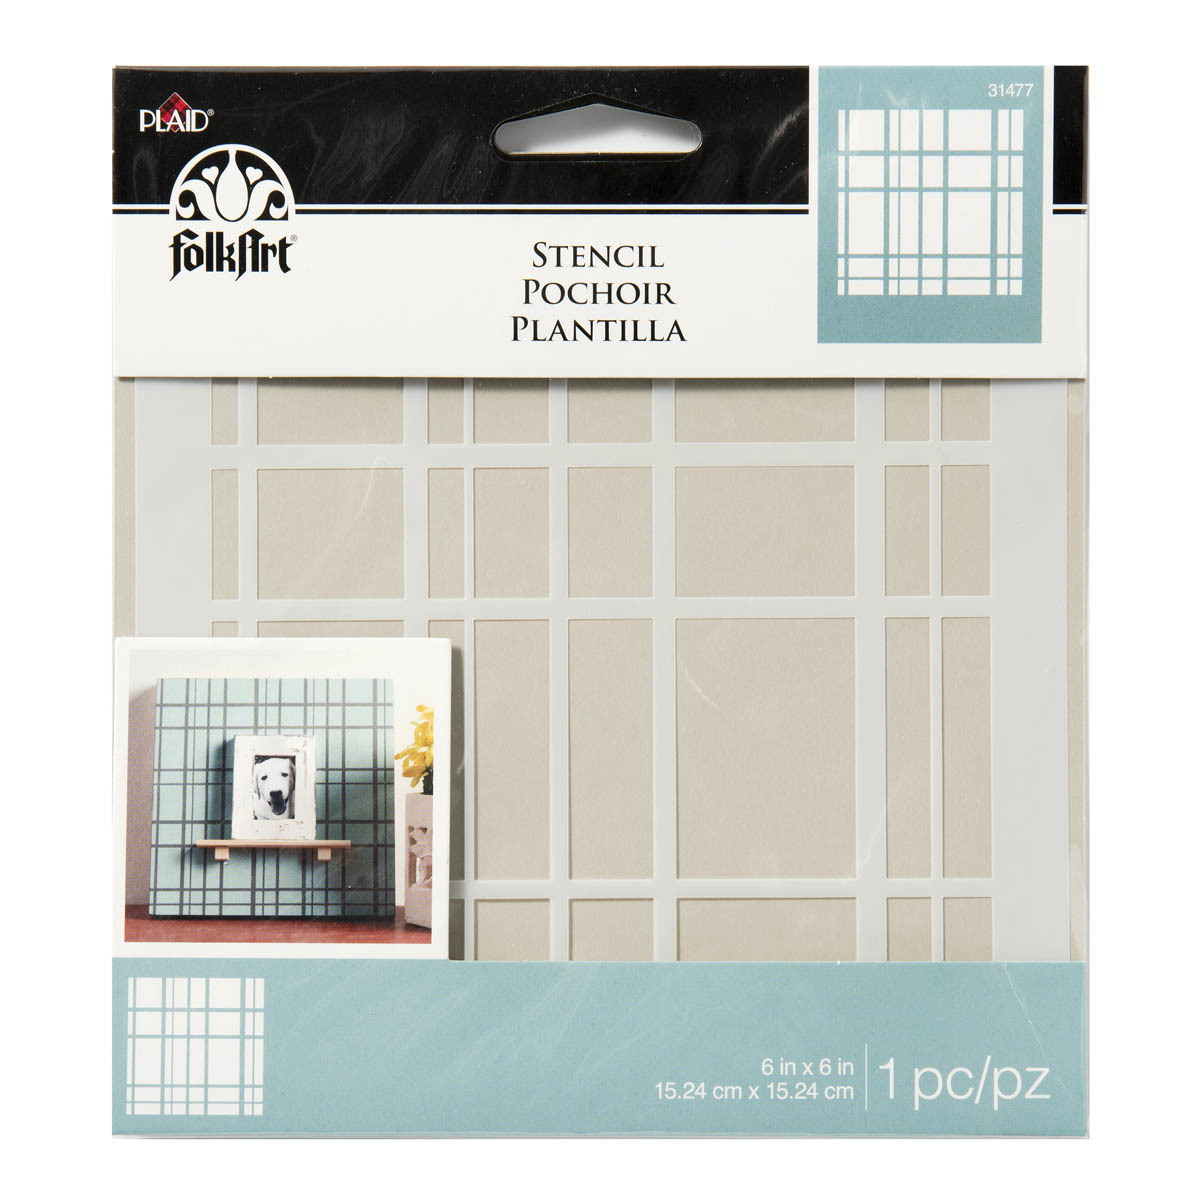 FolkArt ® Painting Stencils - Small - Plaid Design - 31477